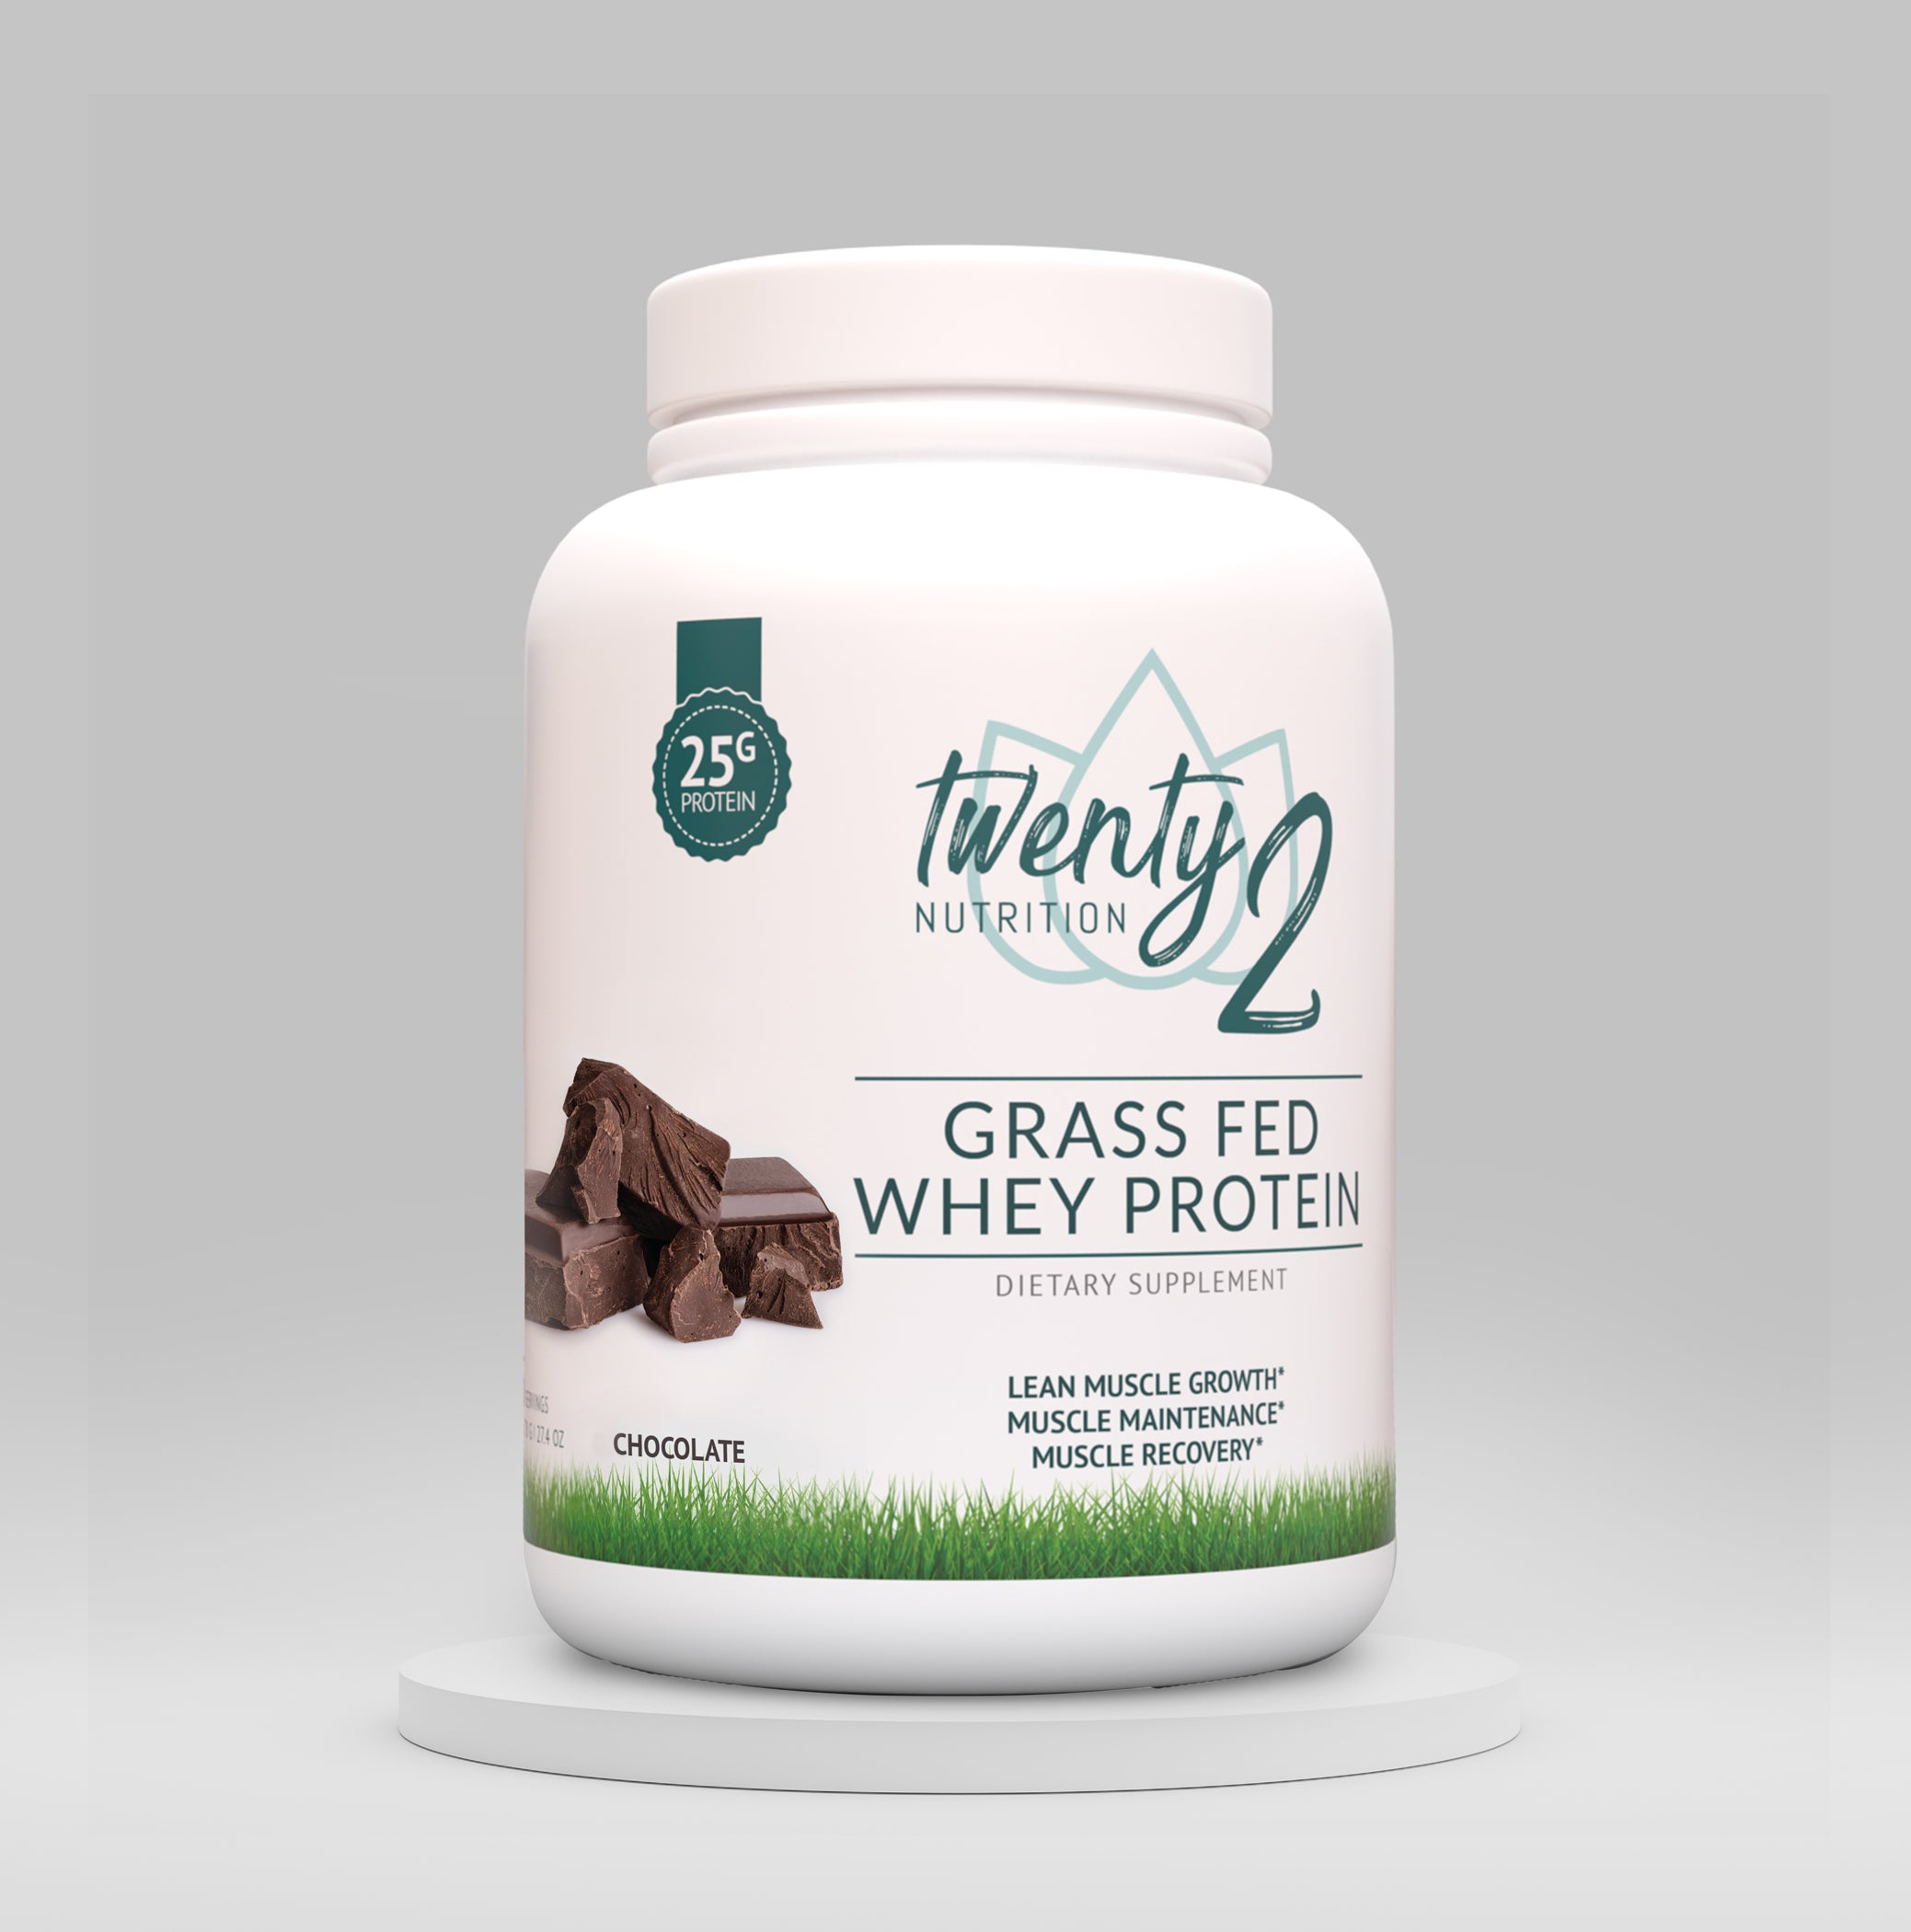 Grass Fed Whey Protein – Twenty2 Nutrition